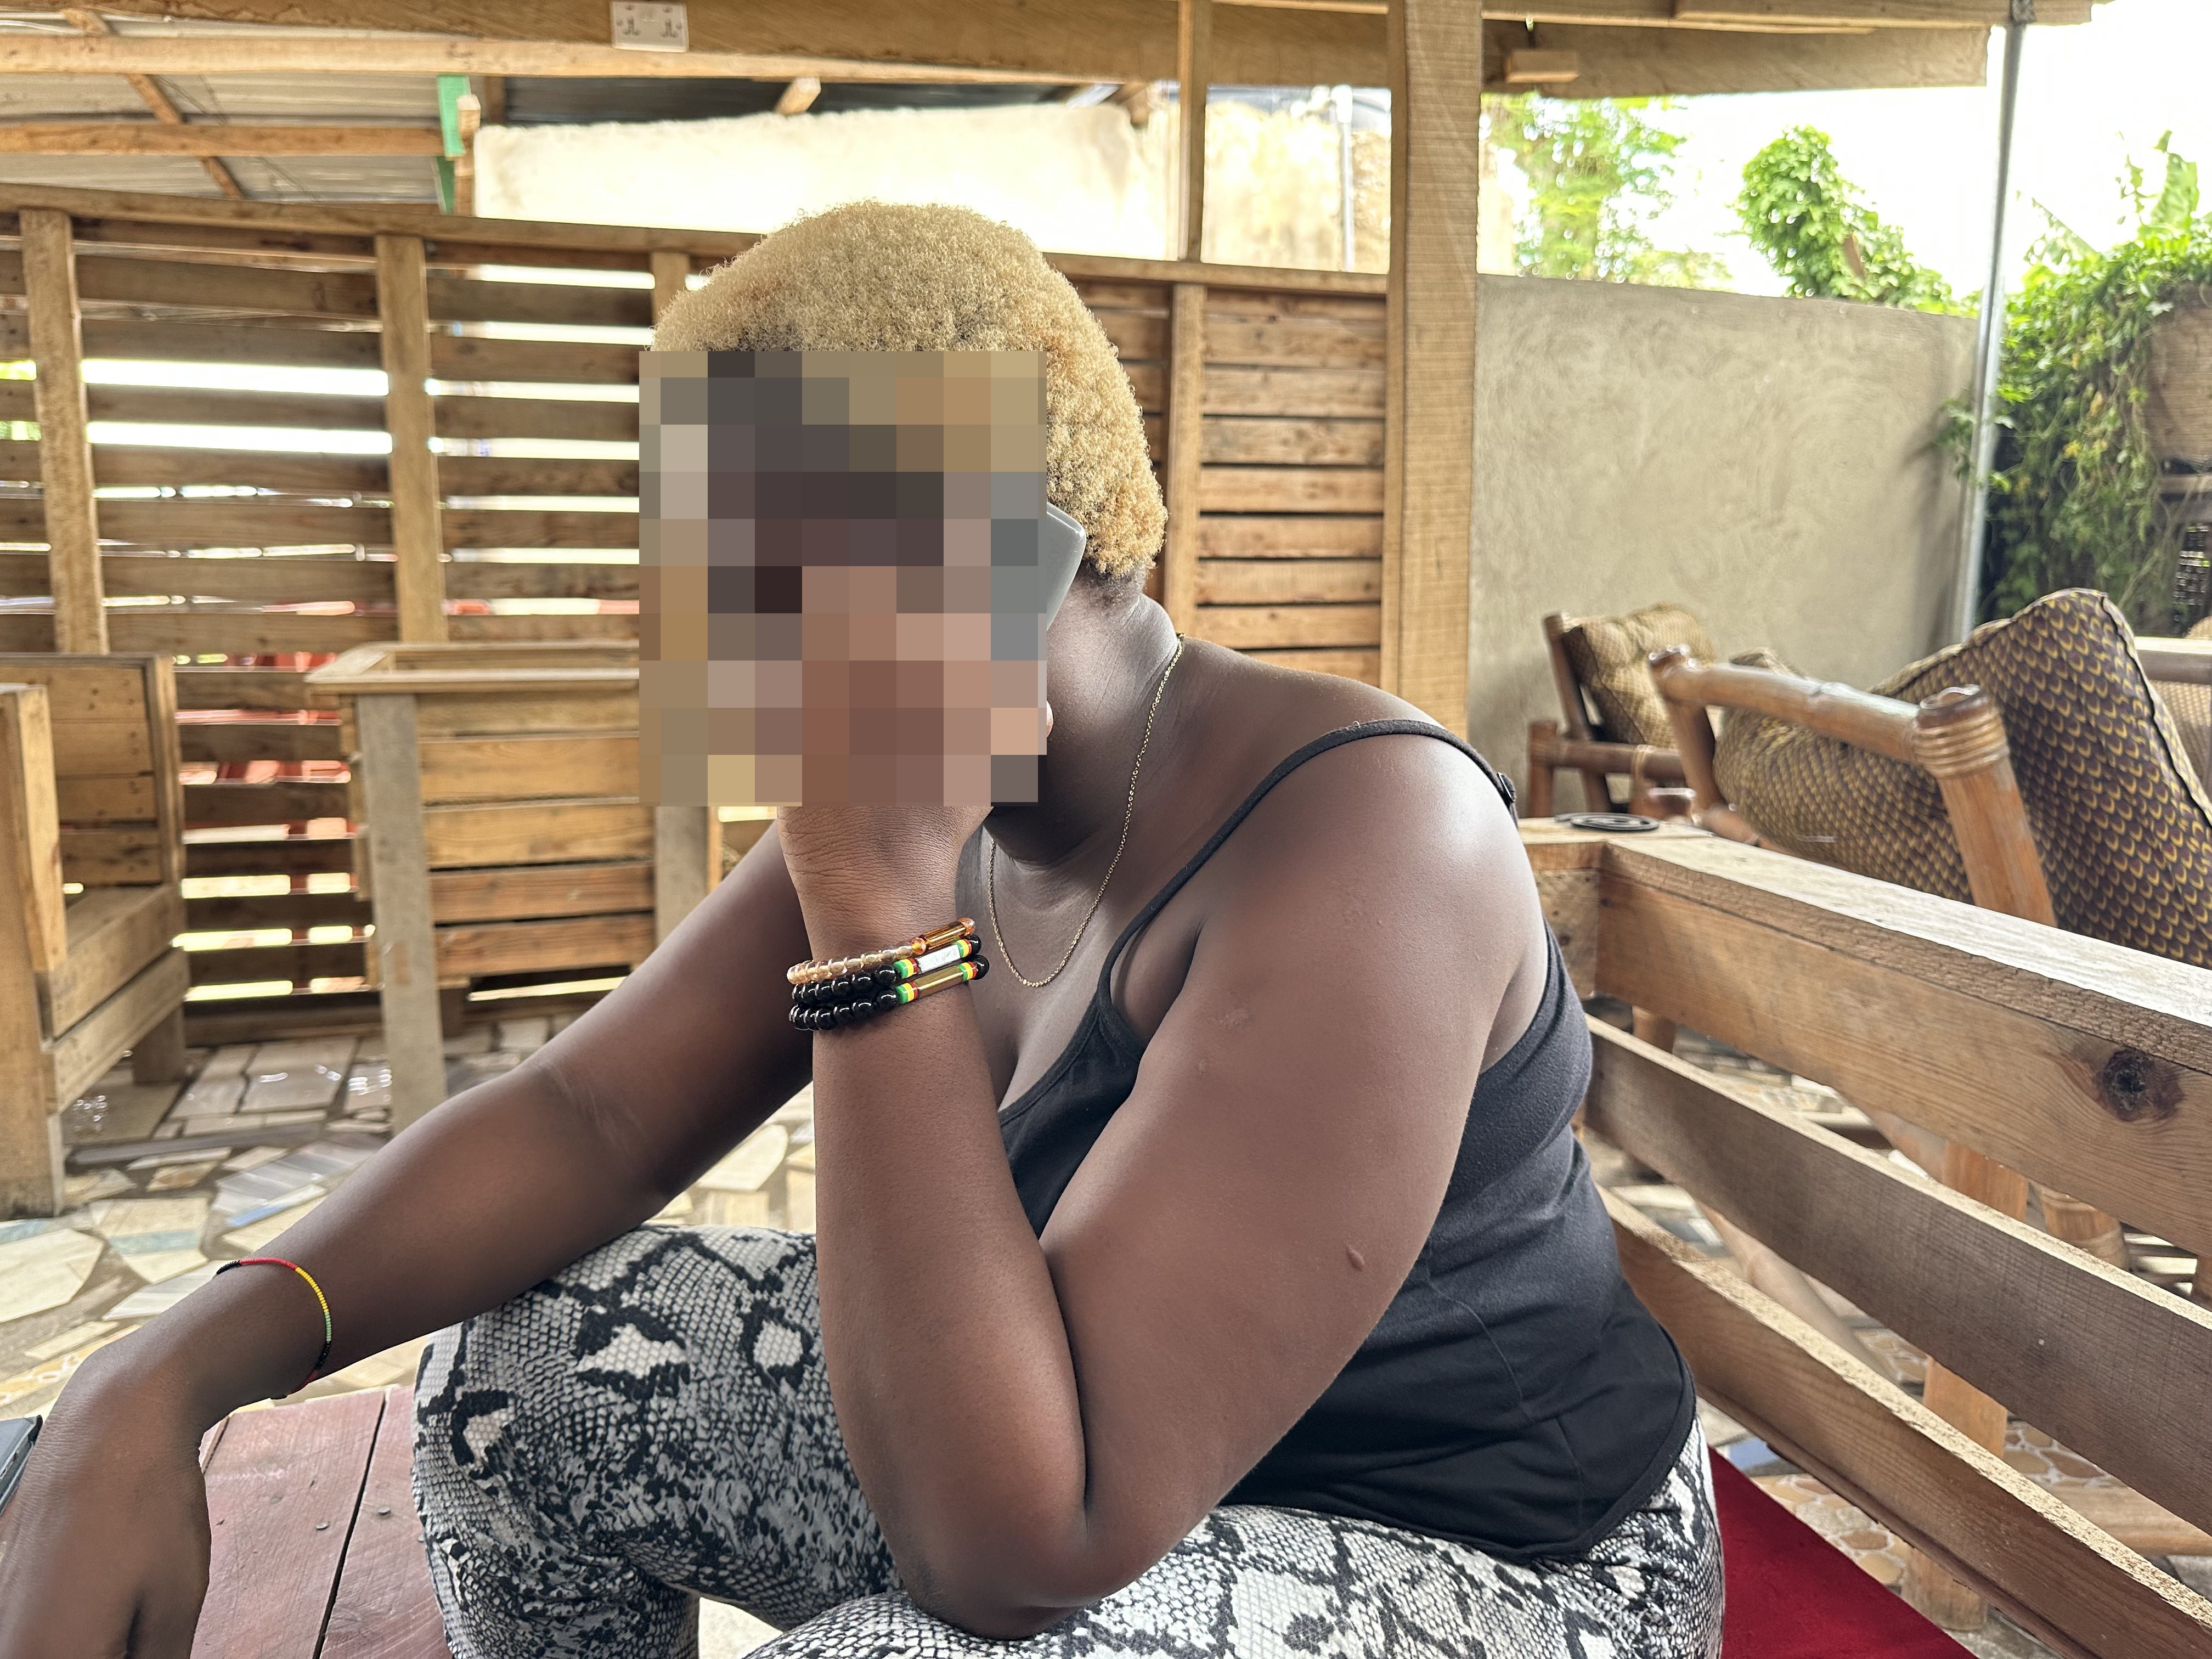 I knew it was a risk A Nigerian migrant sex worker in Ghana Womens Rights Al Jazeera pic